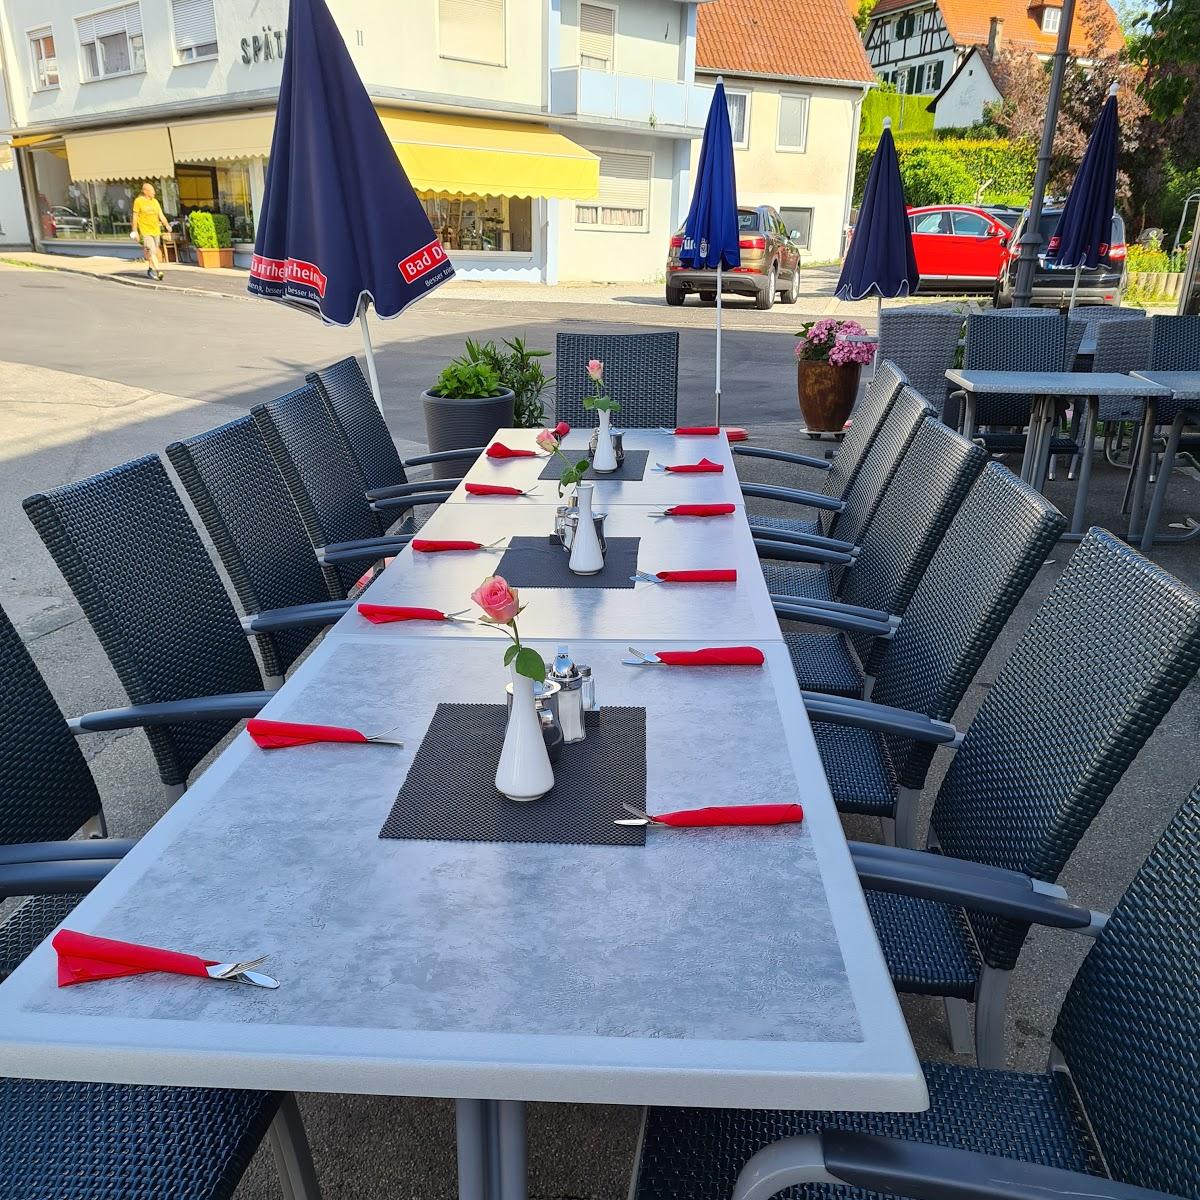 Restaurant "Café Restaurant Reck" in  Aulendorf